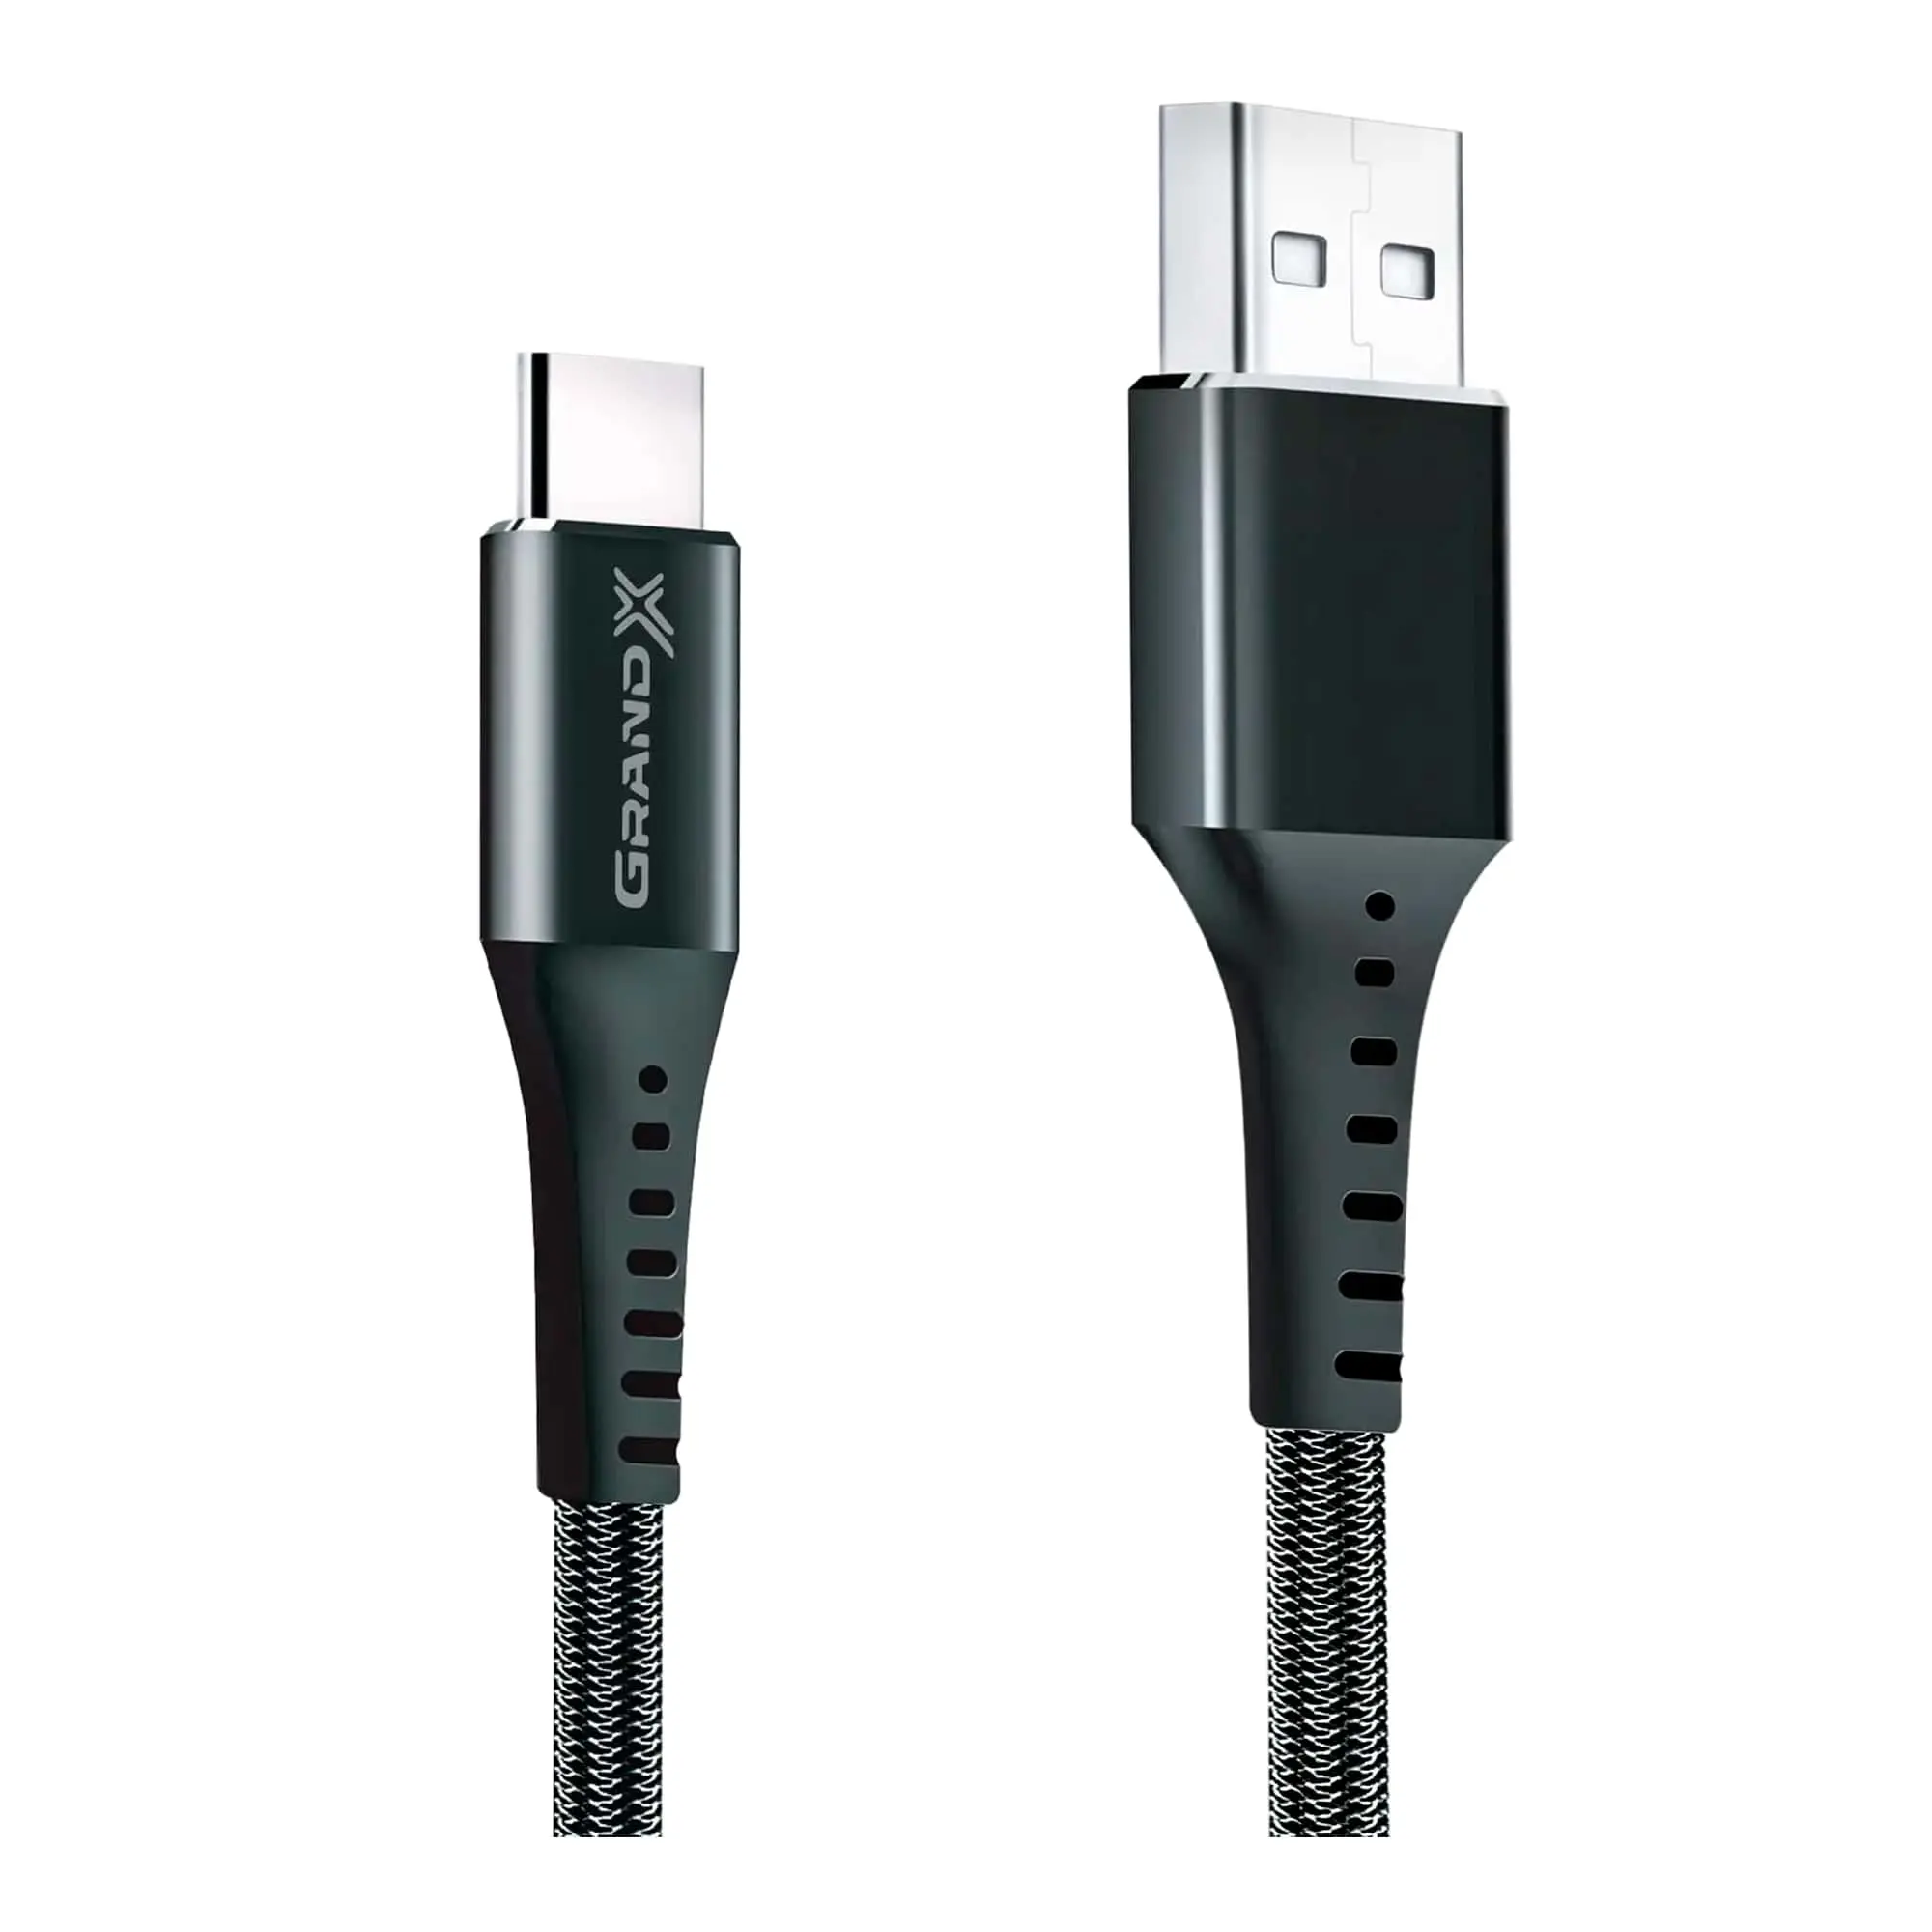 Кабель Grand-X USB-type C 3A, 1.2m, Fast Сharge, Black толст.нейлон оплетка, премиум BOX (FC-12B)